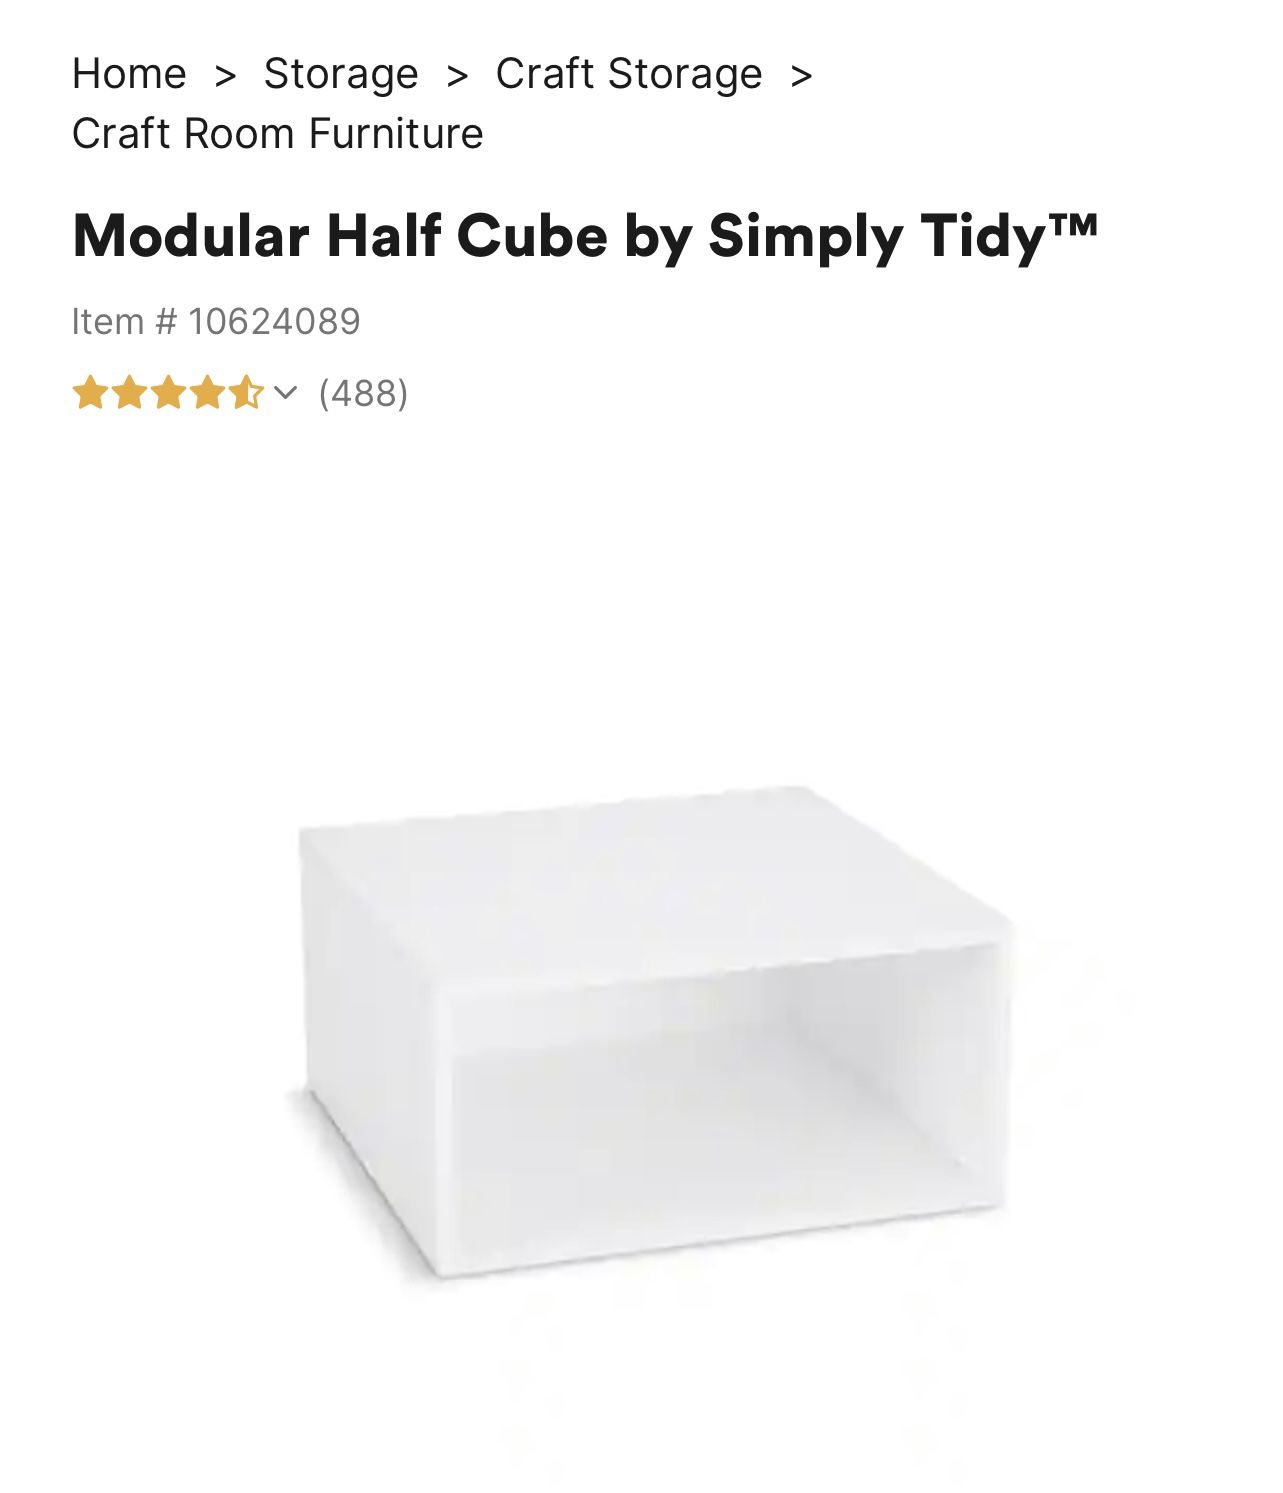 Simply Tidy Modular Half Cube - Each